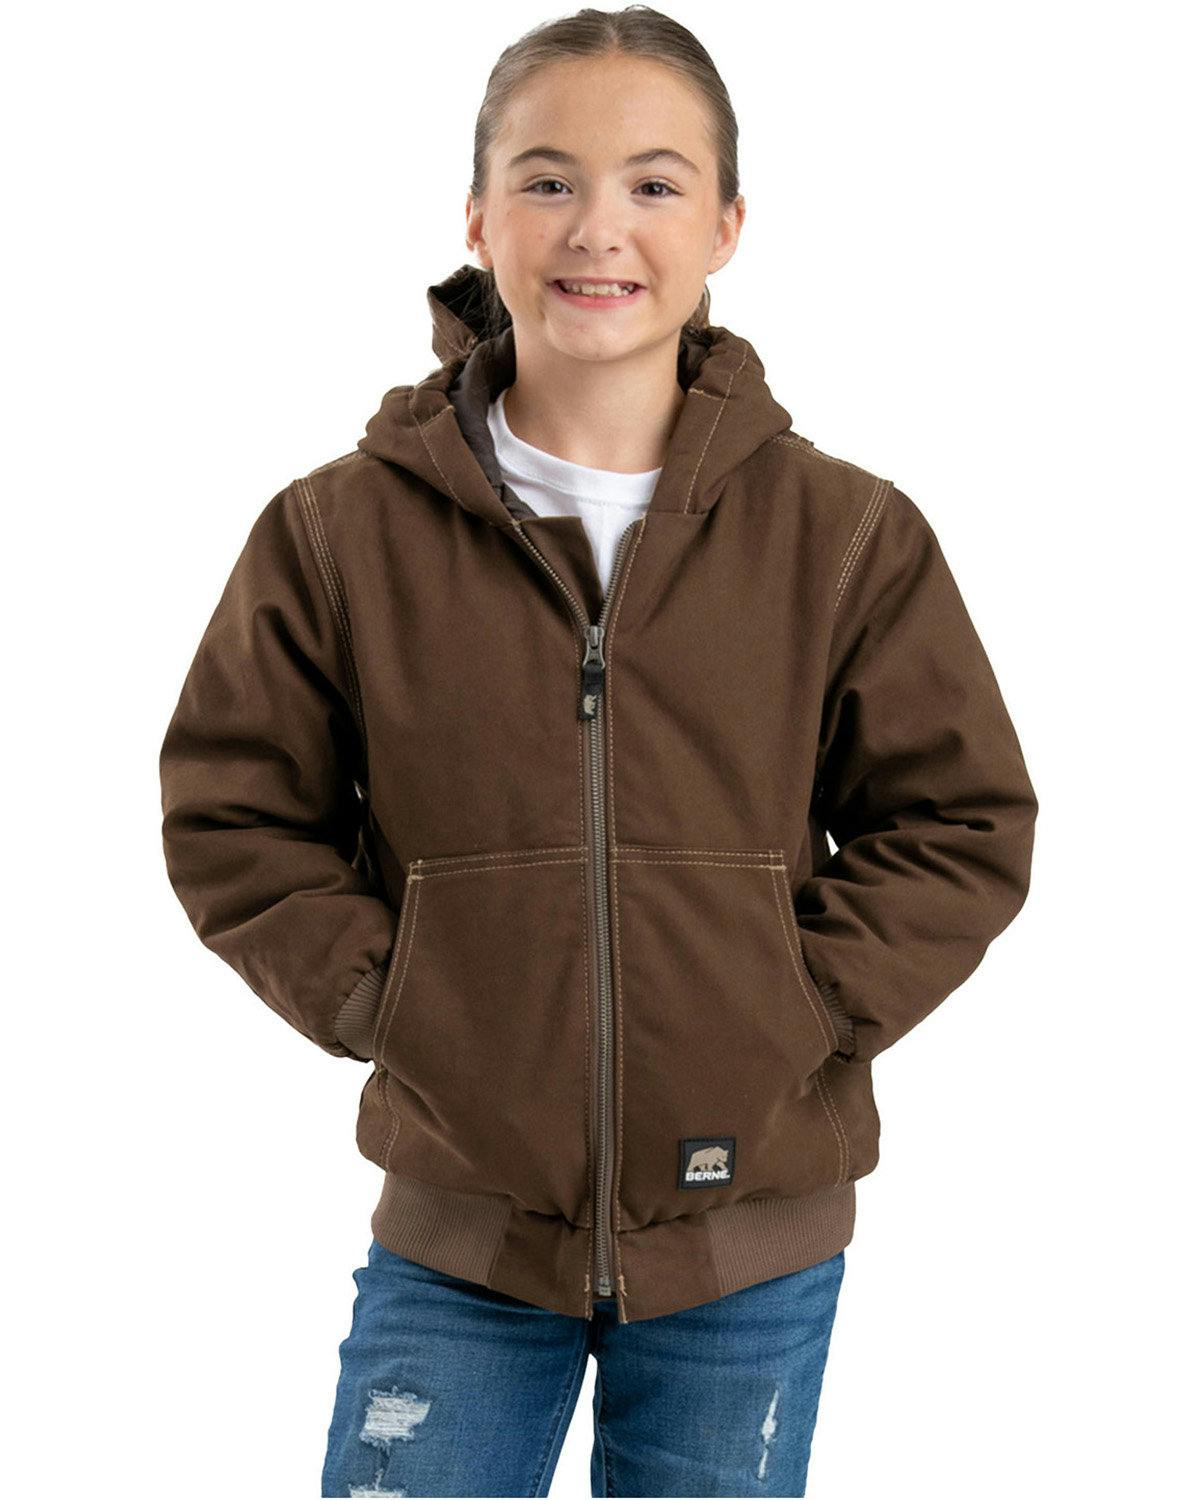 Image for Youth Highland Softstone Duck Hooded Jacket